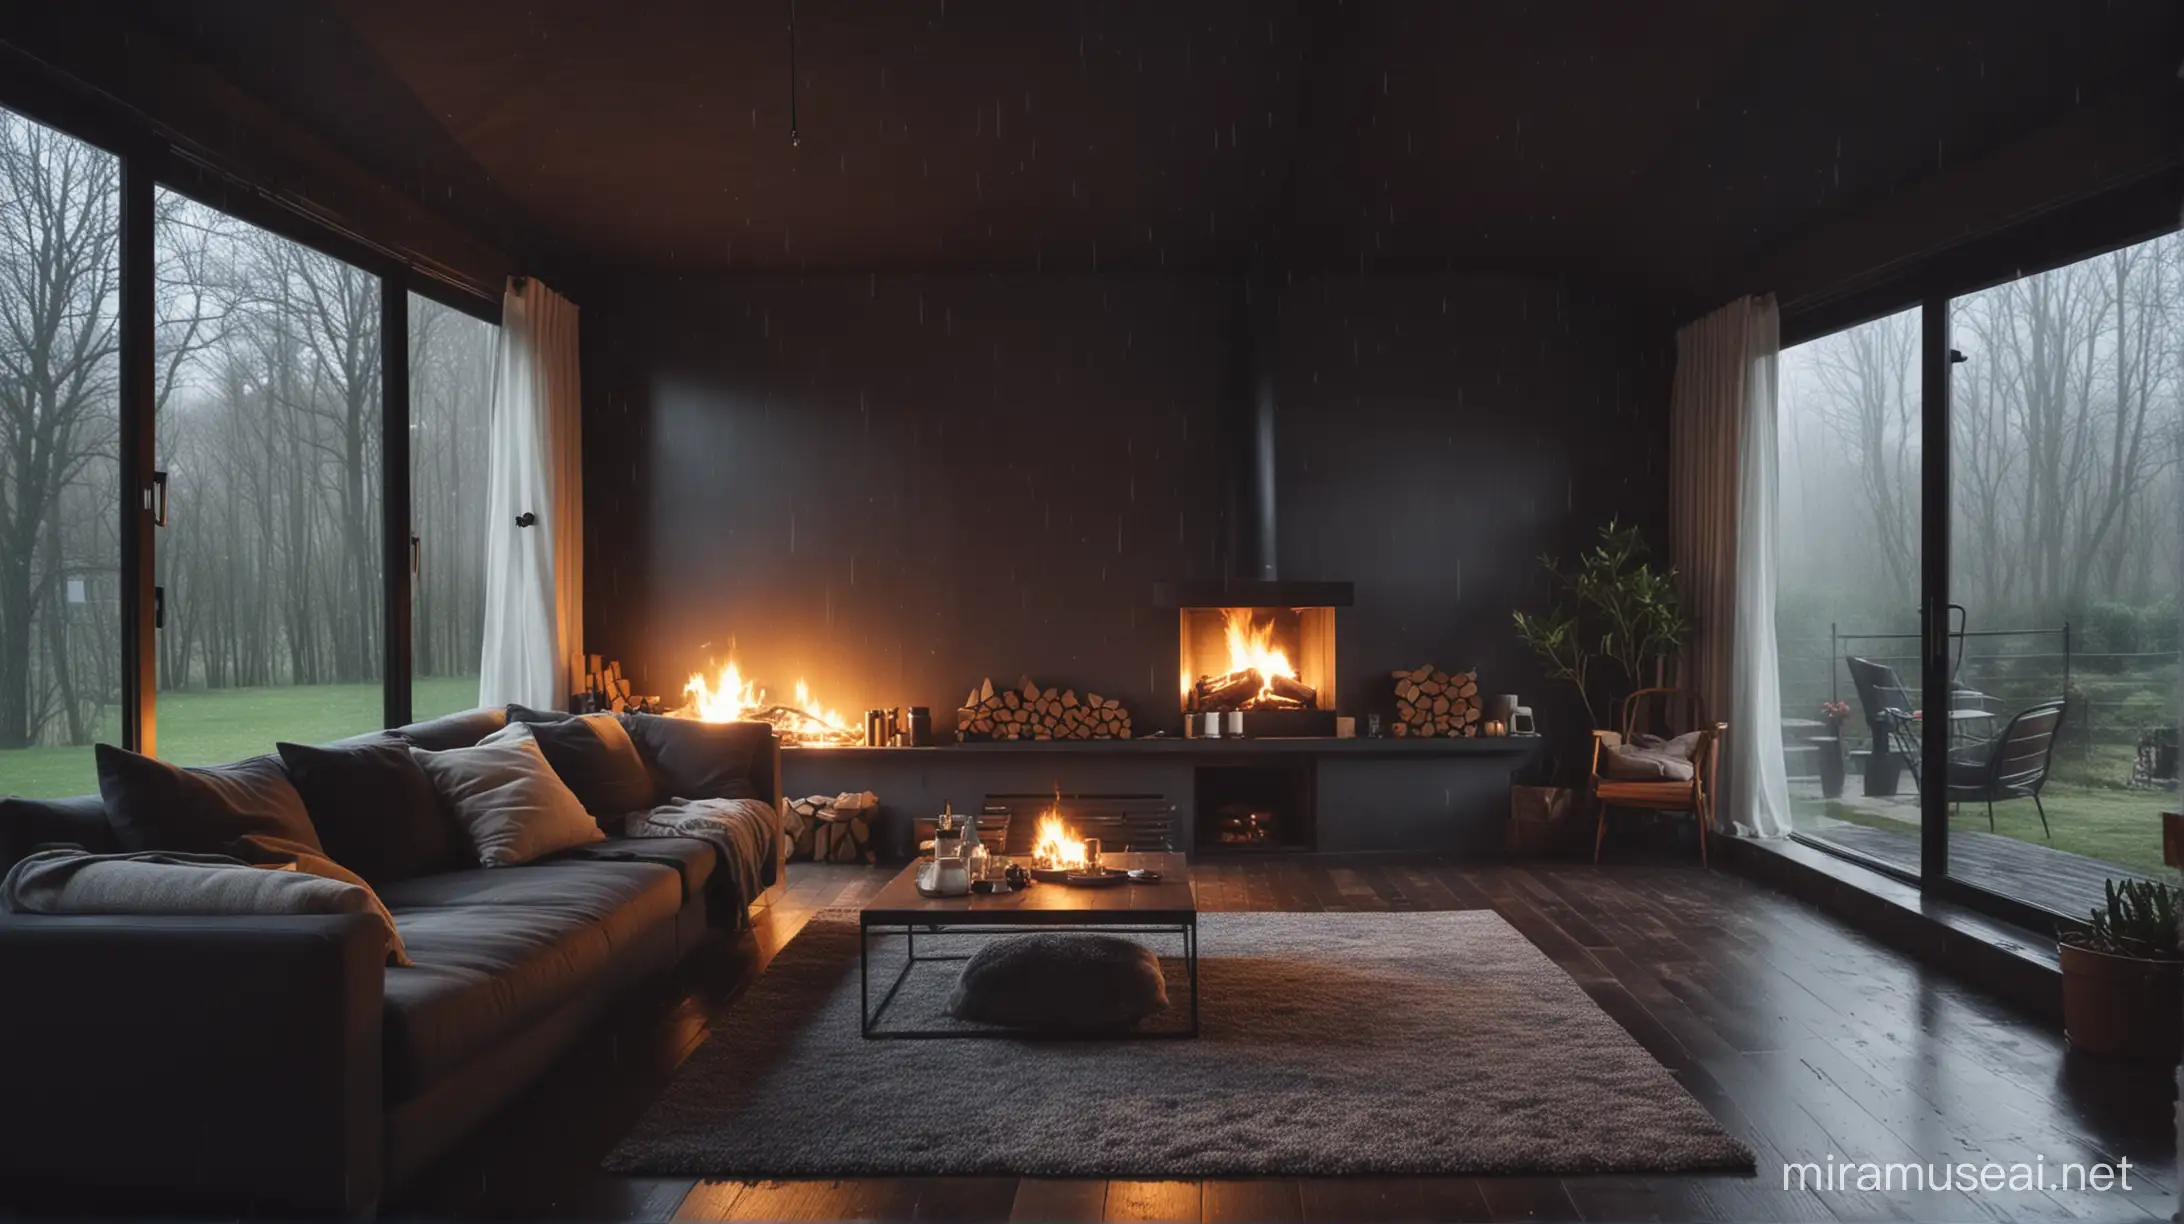 Cozy Bedroom with Rainy Window and Fireplace Glow